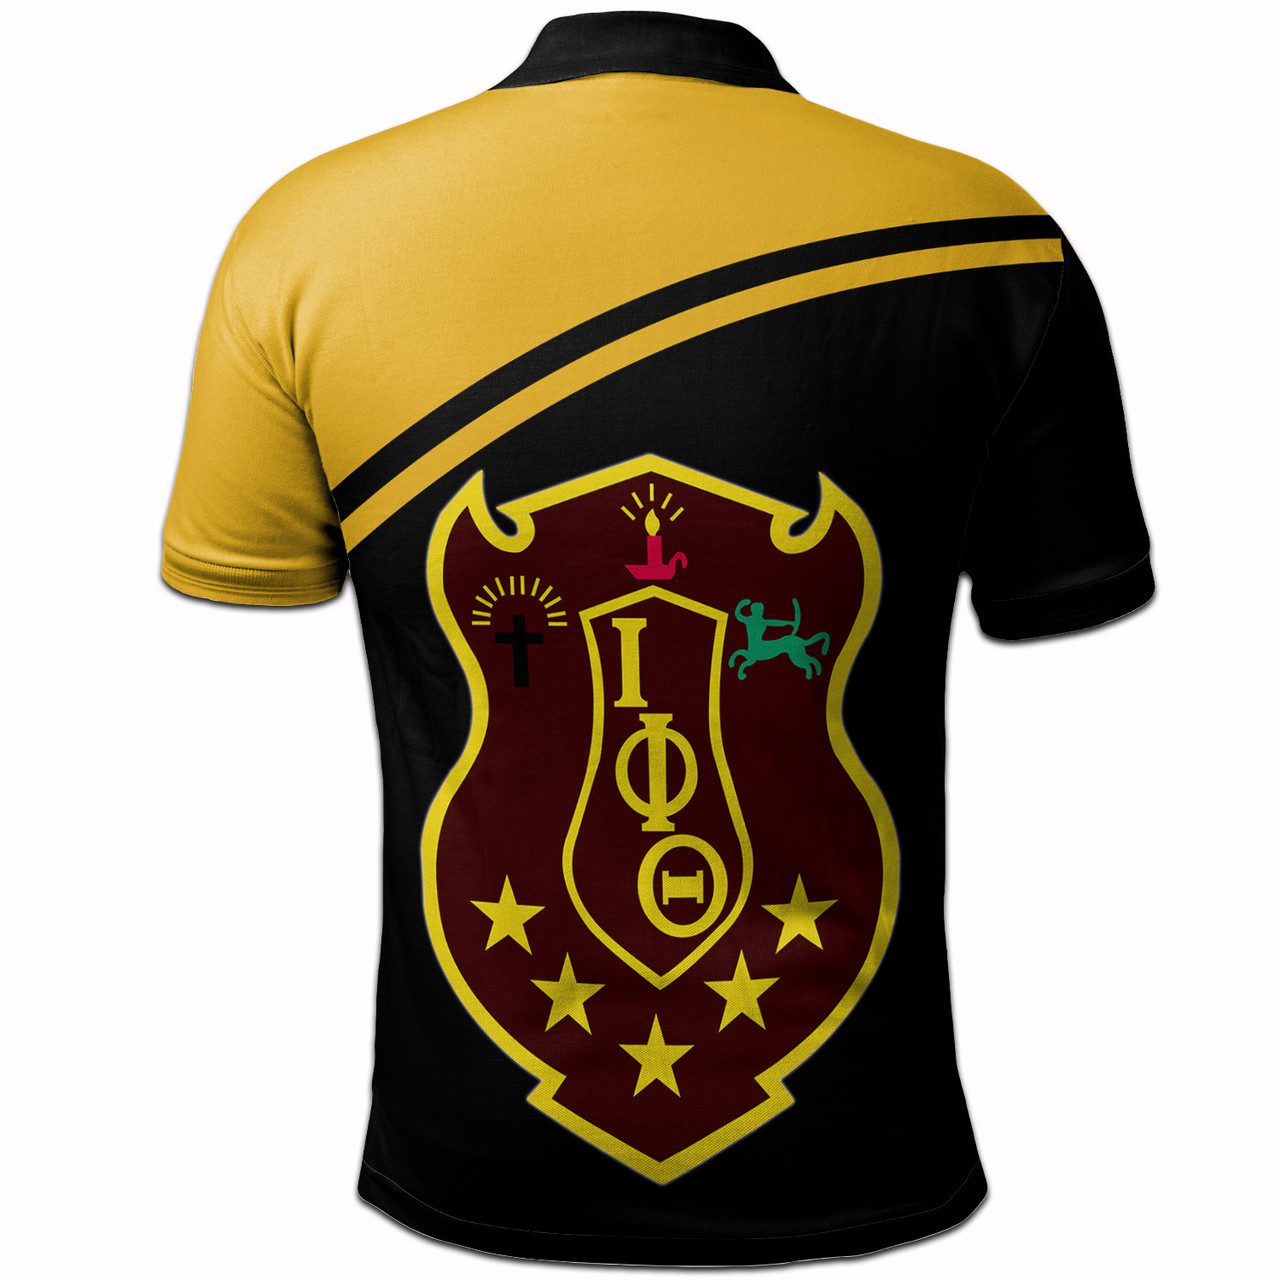 Iota Phi Theta Polo Shirt – Fraternity Curve Version Polo Shirt